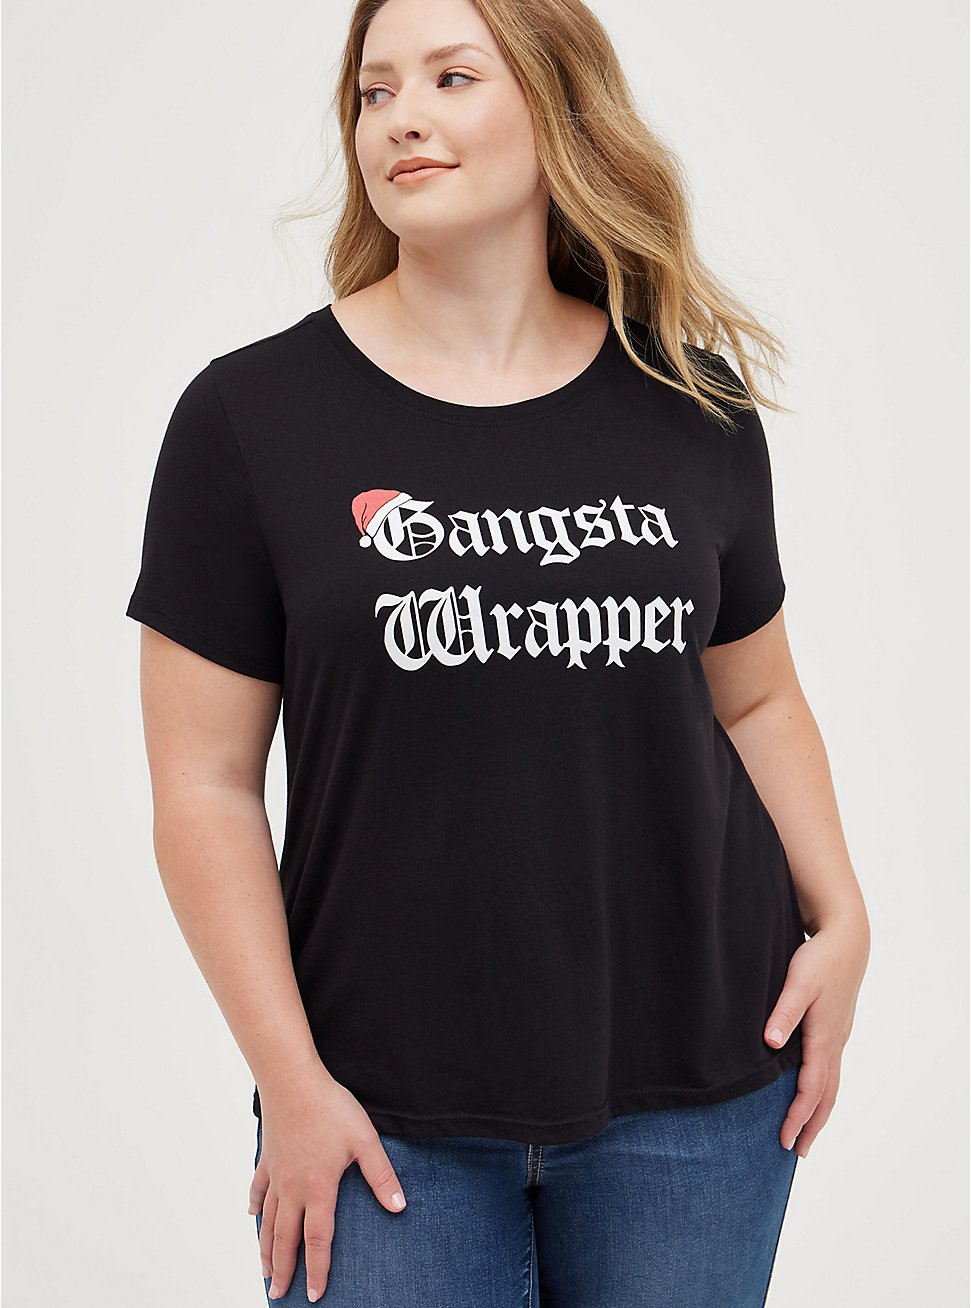 Everyday Tee - Signature Jersey Gangsta Wrapper Black, DEEP BLACK, hi-res